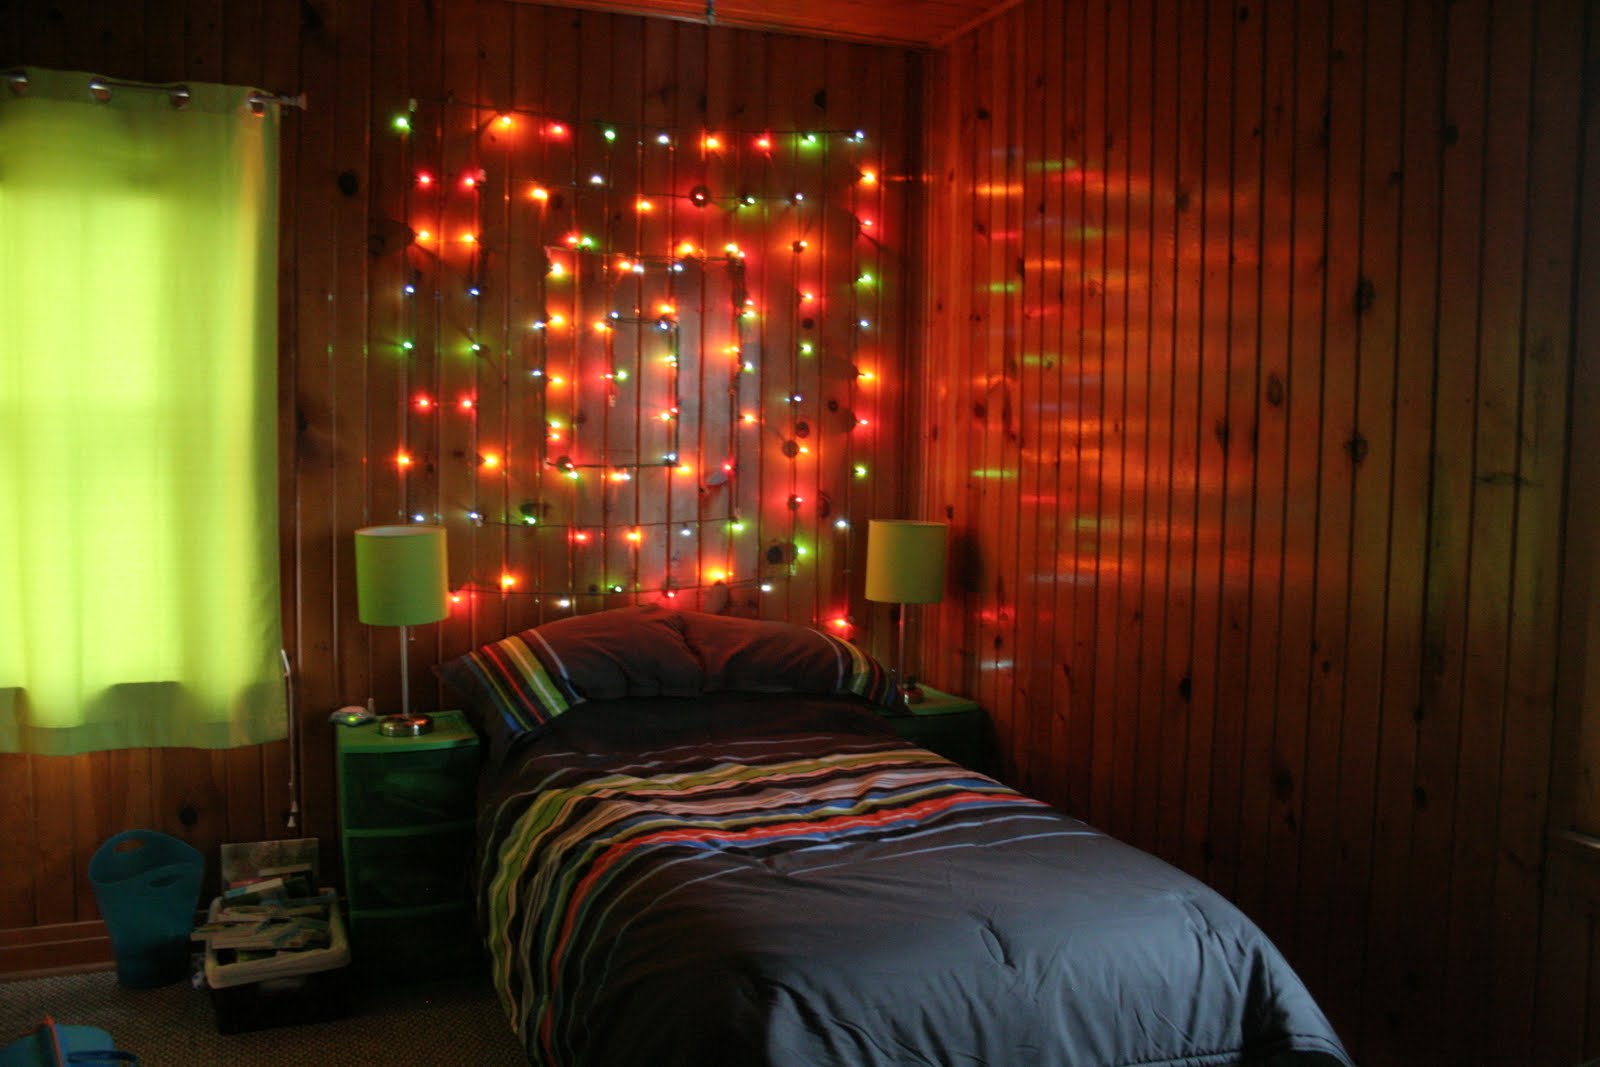 Best Of 33 Images Best Christmas Lights For Bedroom Dma Homes 88170 for measurements 1600 X 1067